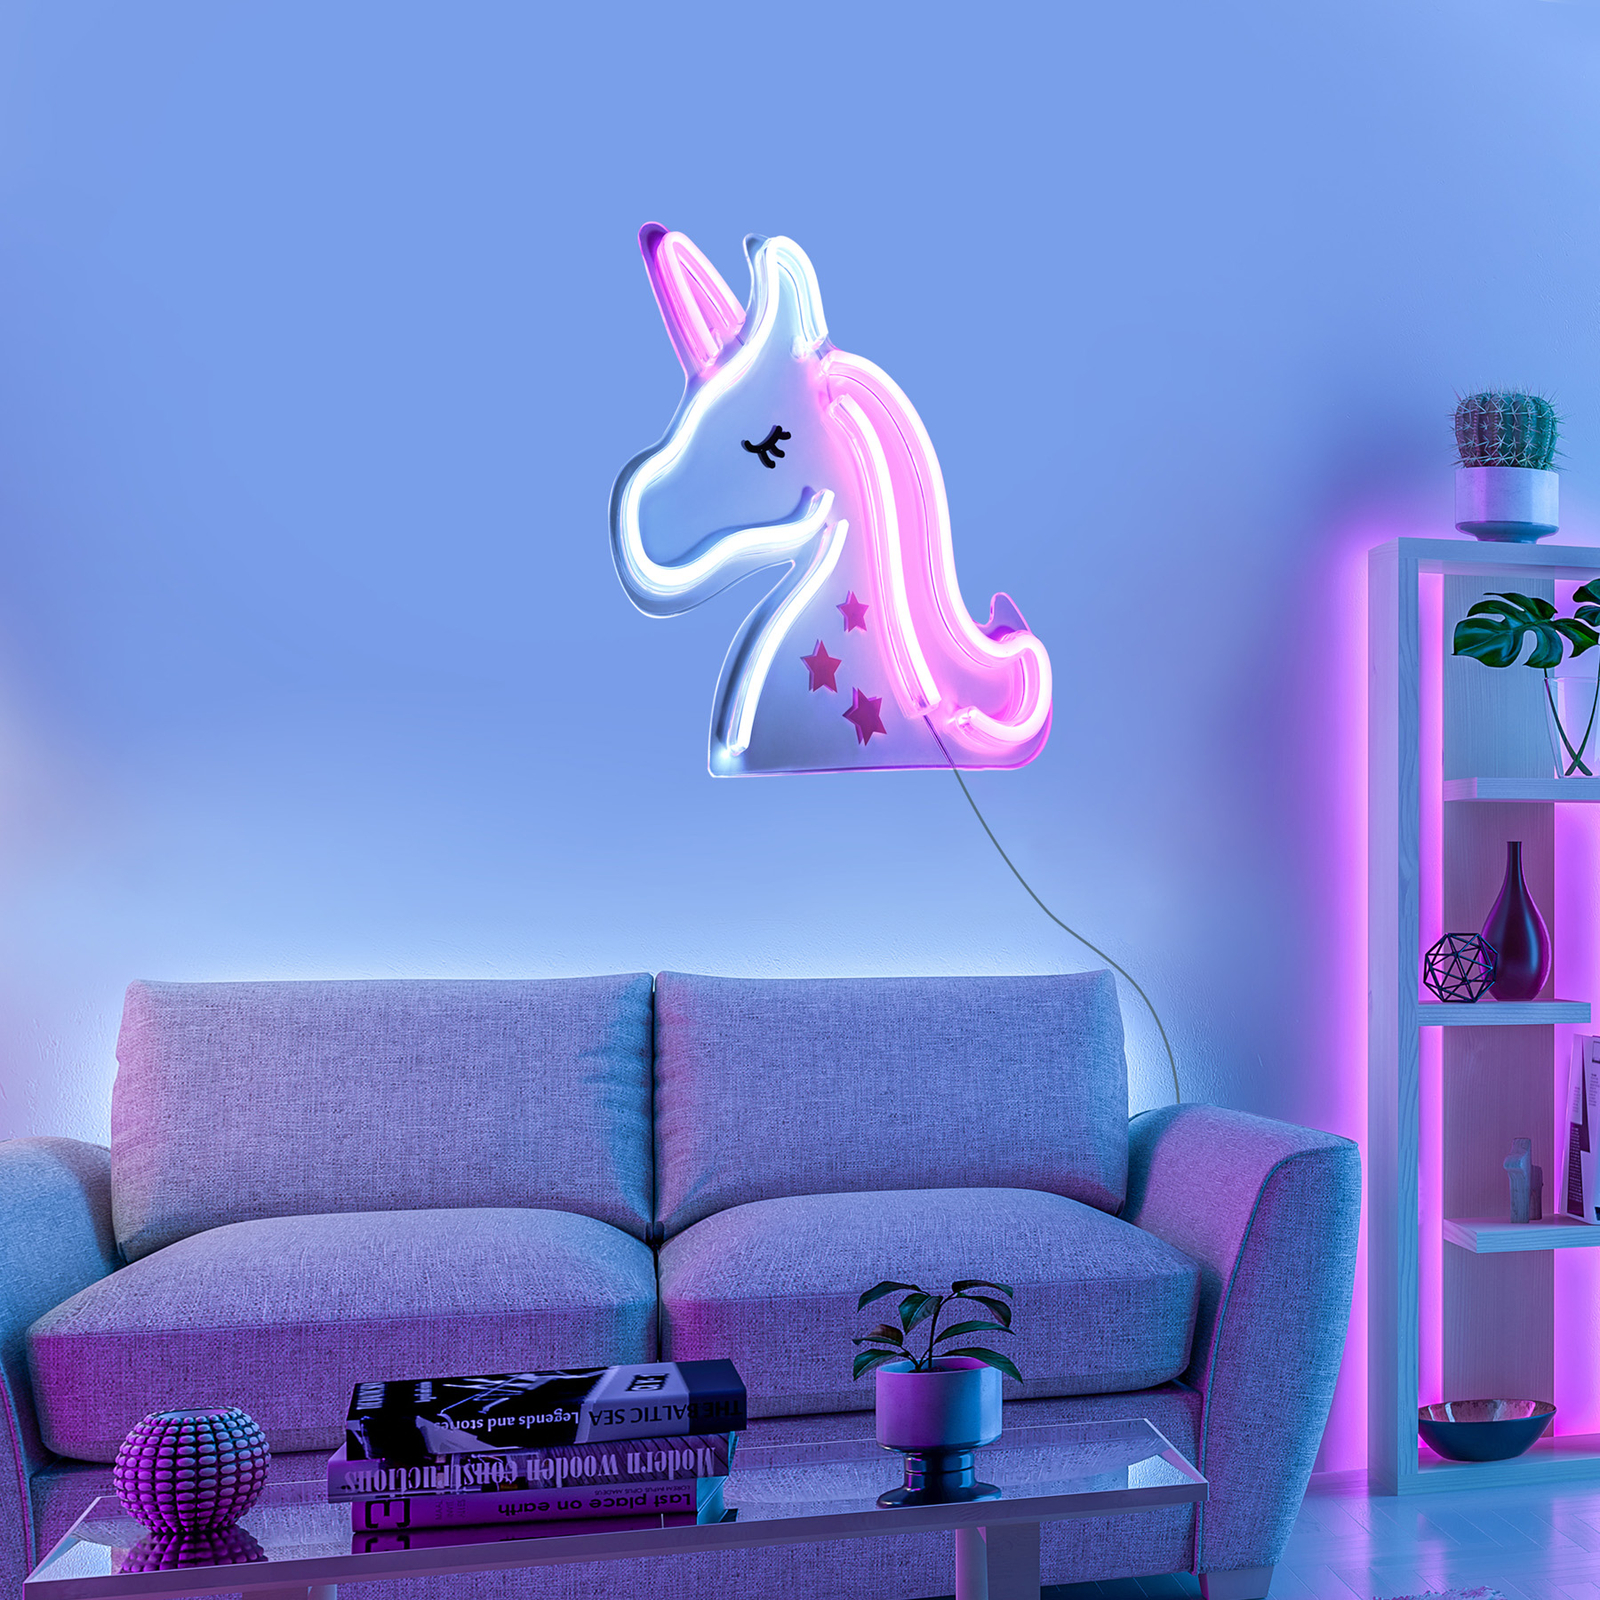 Neon Unicorn LED wall light, USB